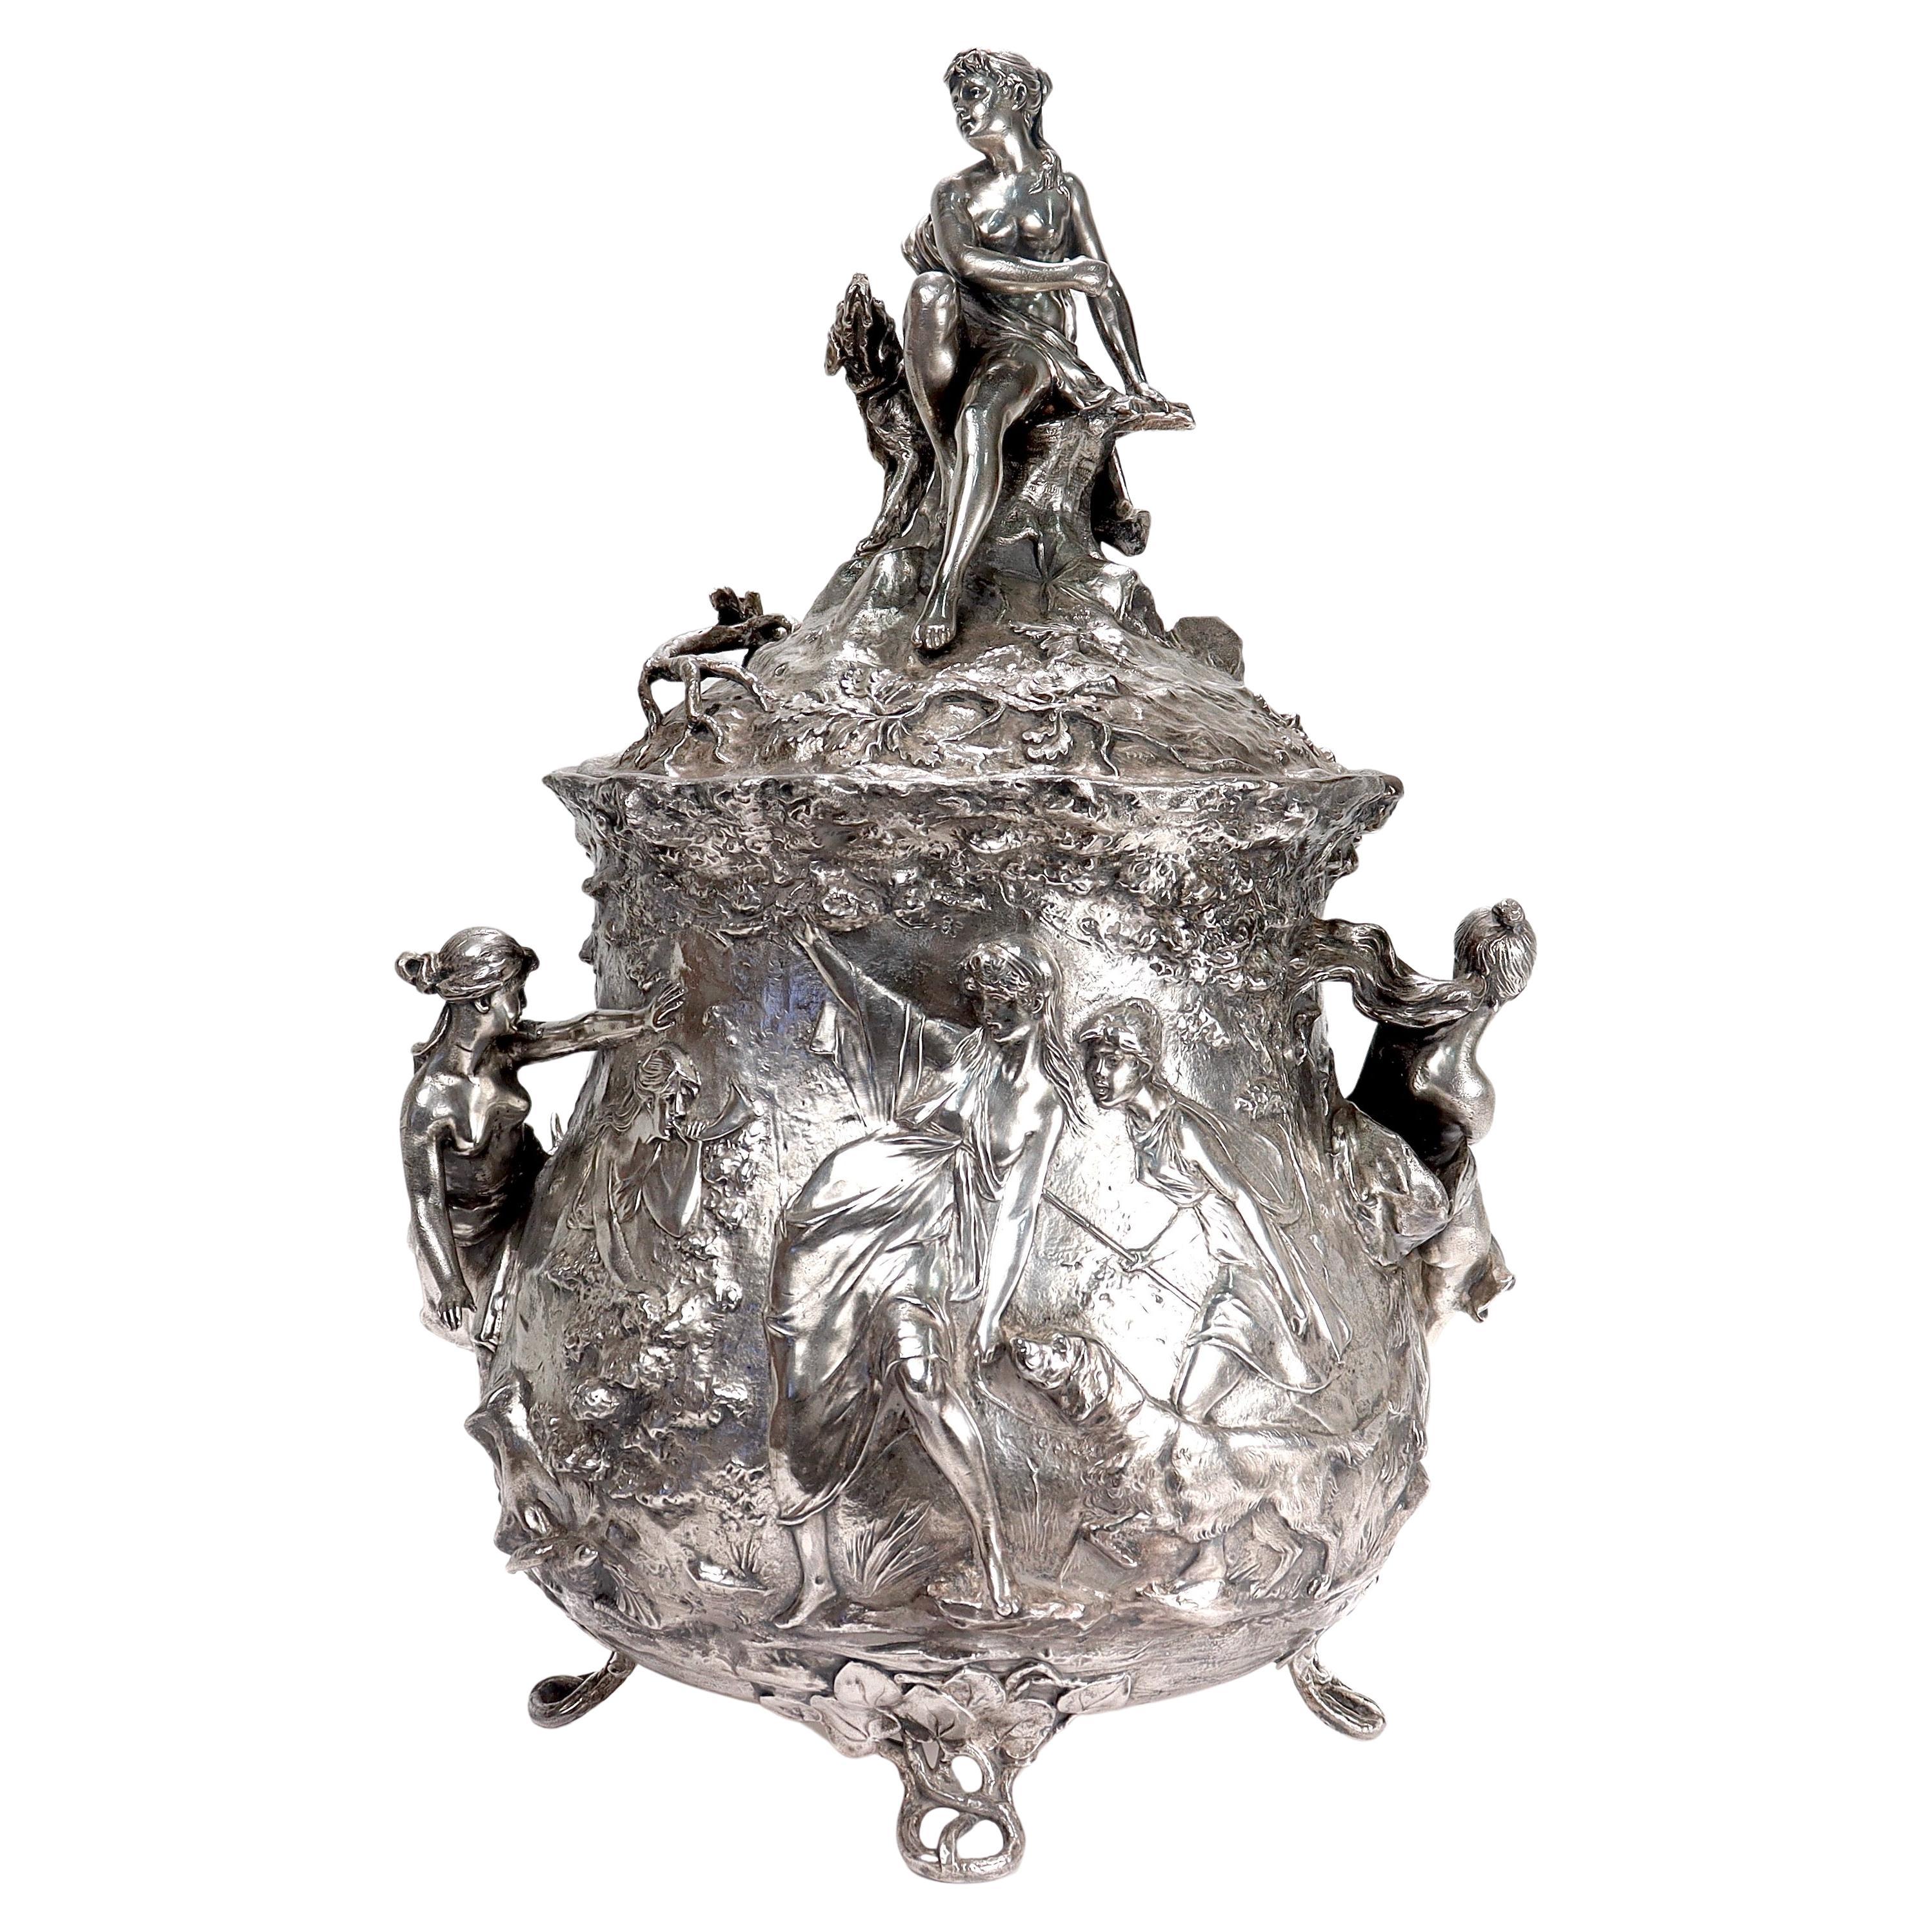 Antique Jugendstil W.M.F. Silver Plated Punch Bowl or Tureen with a Hunt Scene For Sale